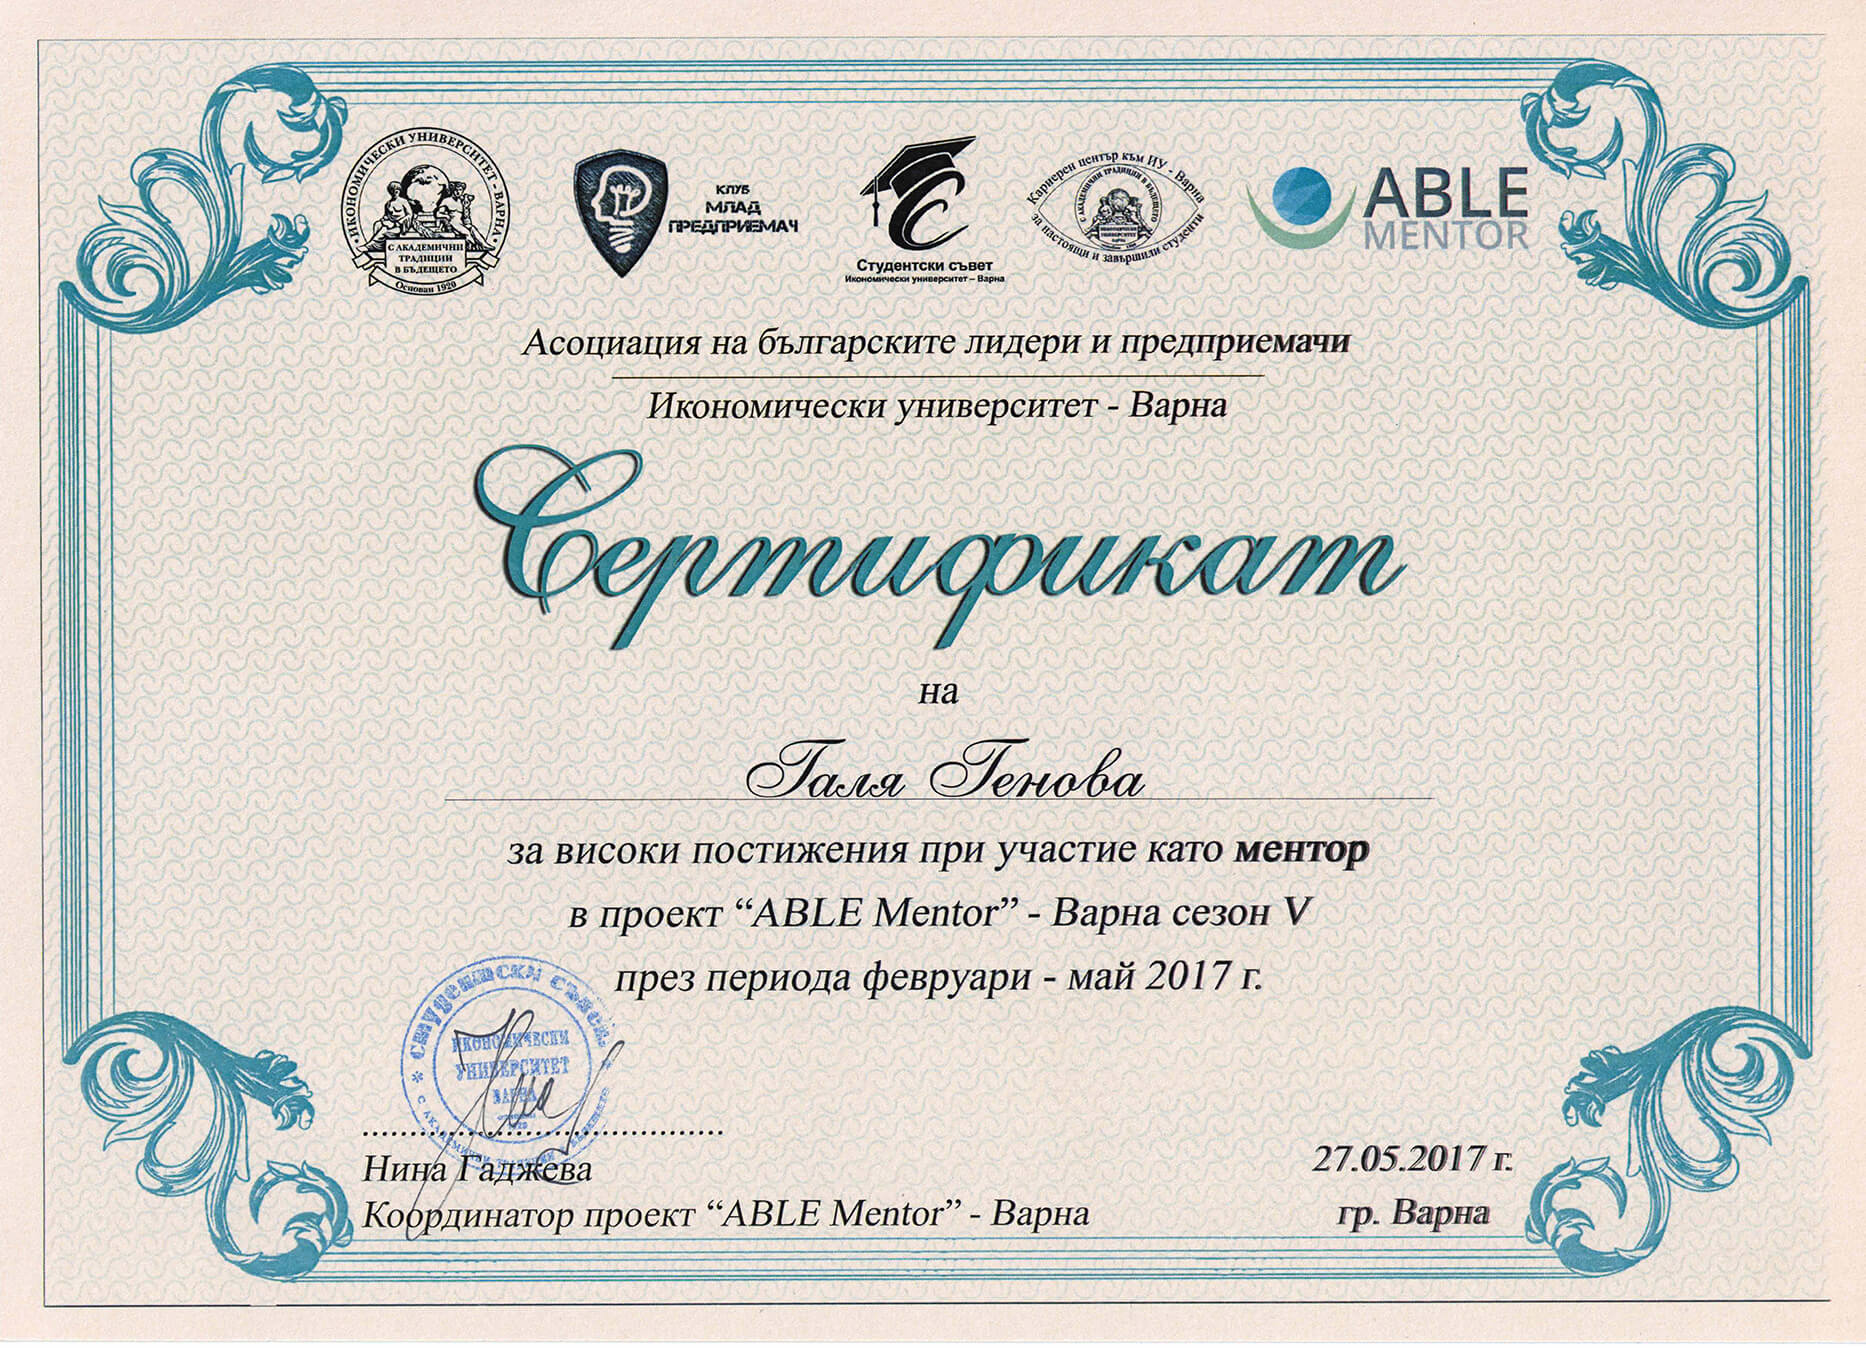 Сертификат - Able mentor